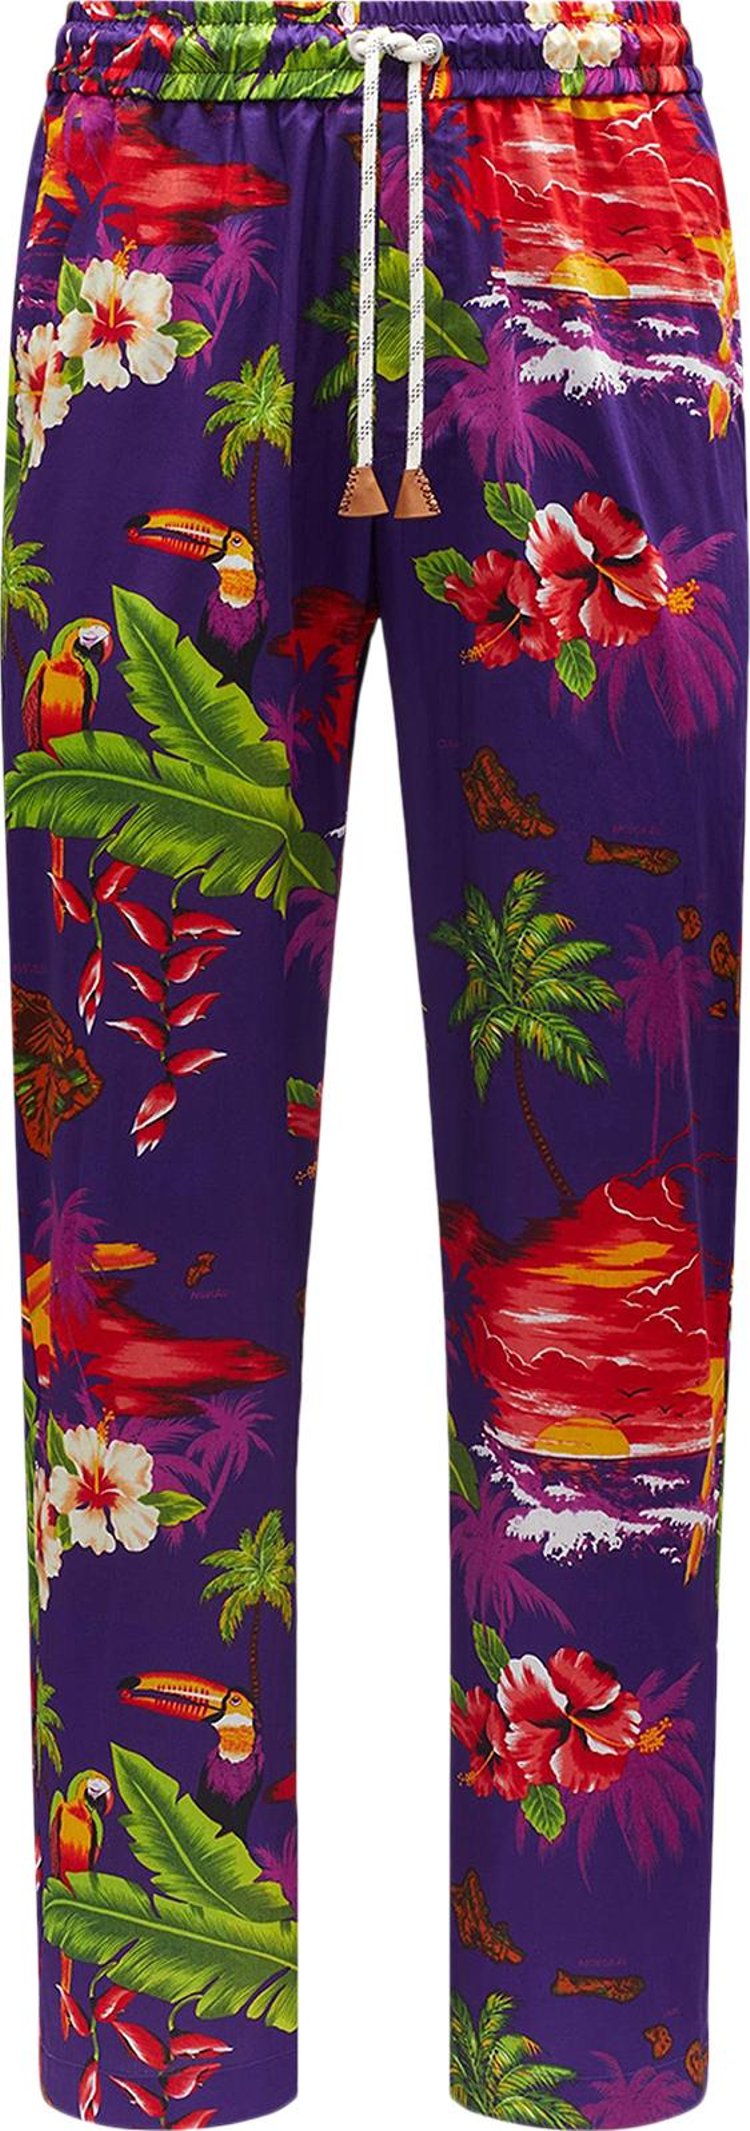 Moncler Genius Printed Trousers 'Multicolor'